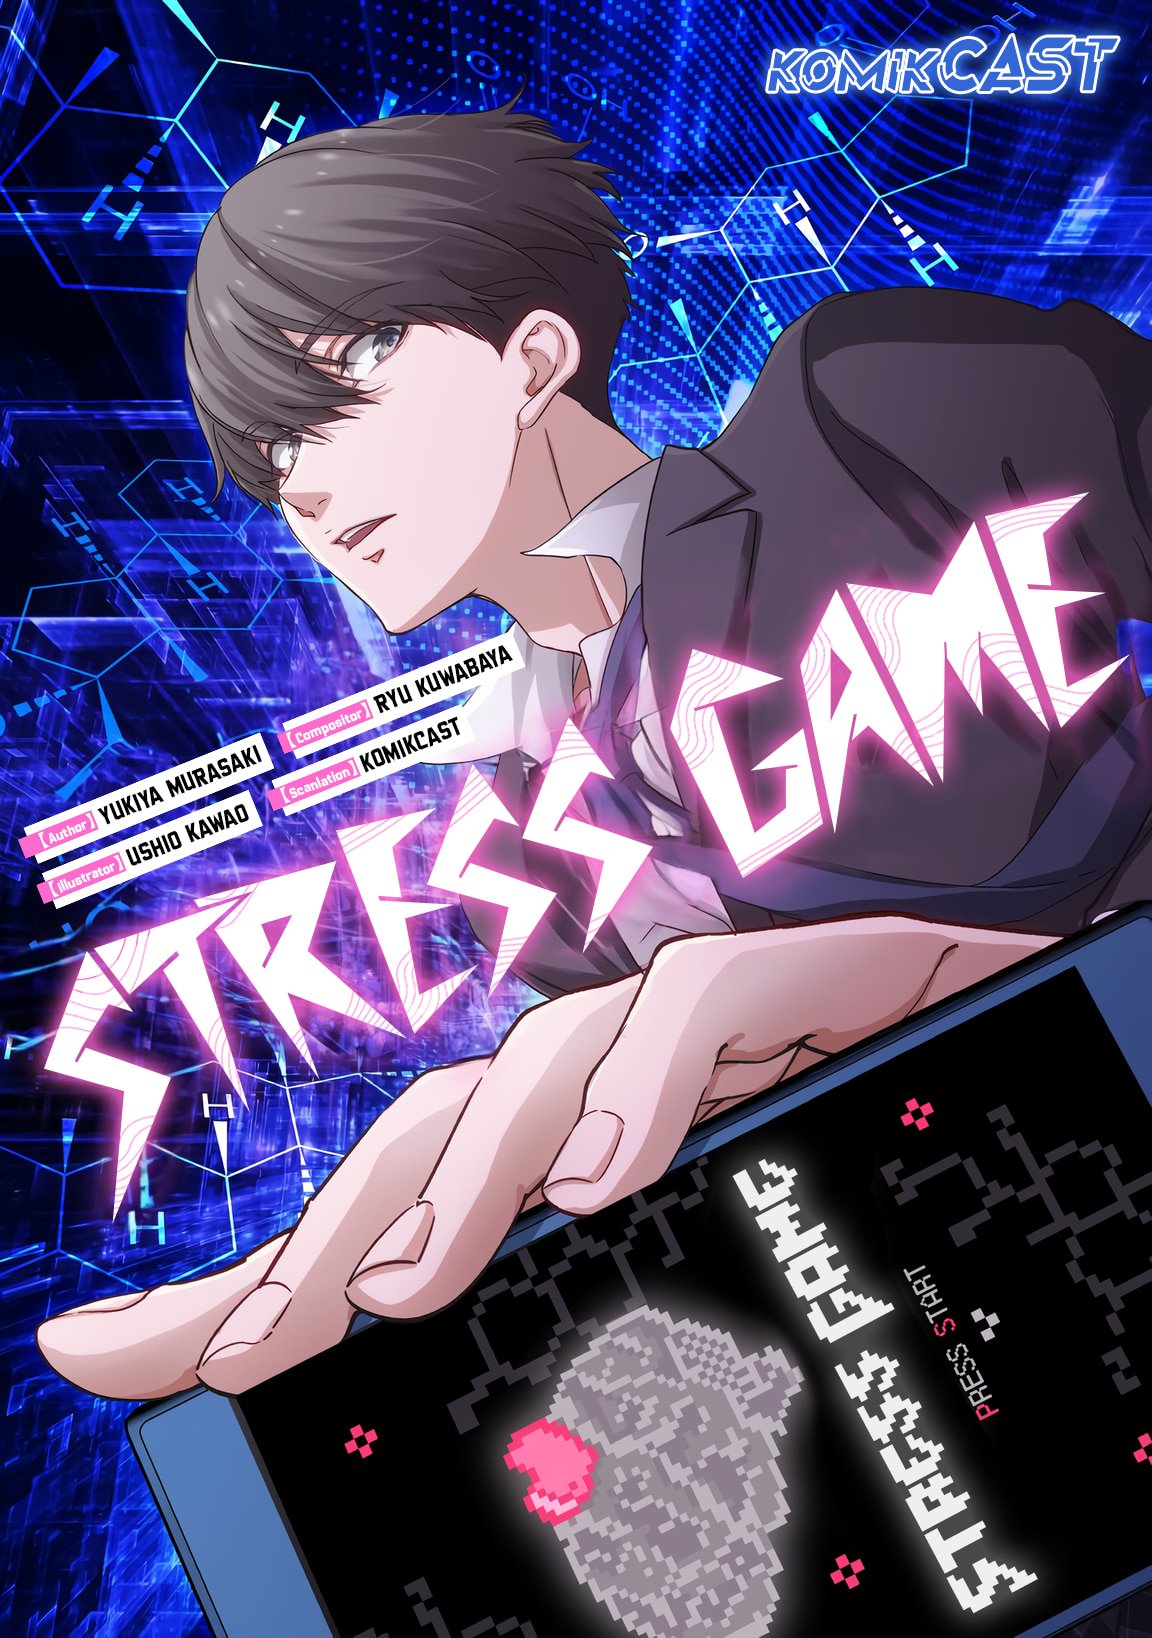 Stress Game